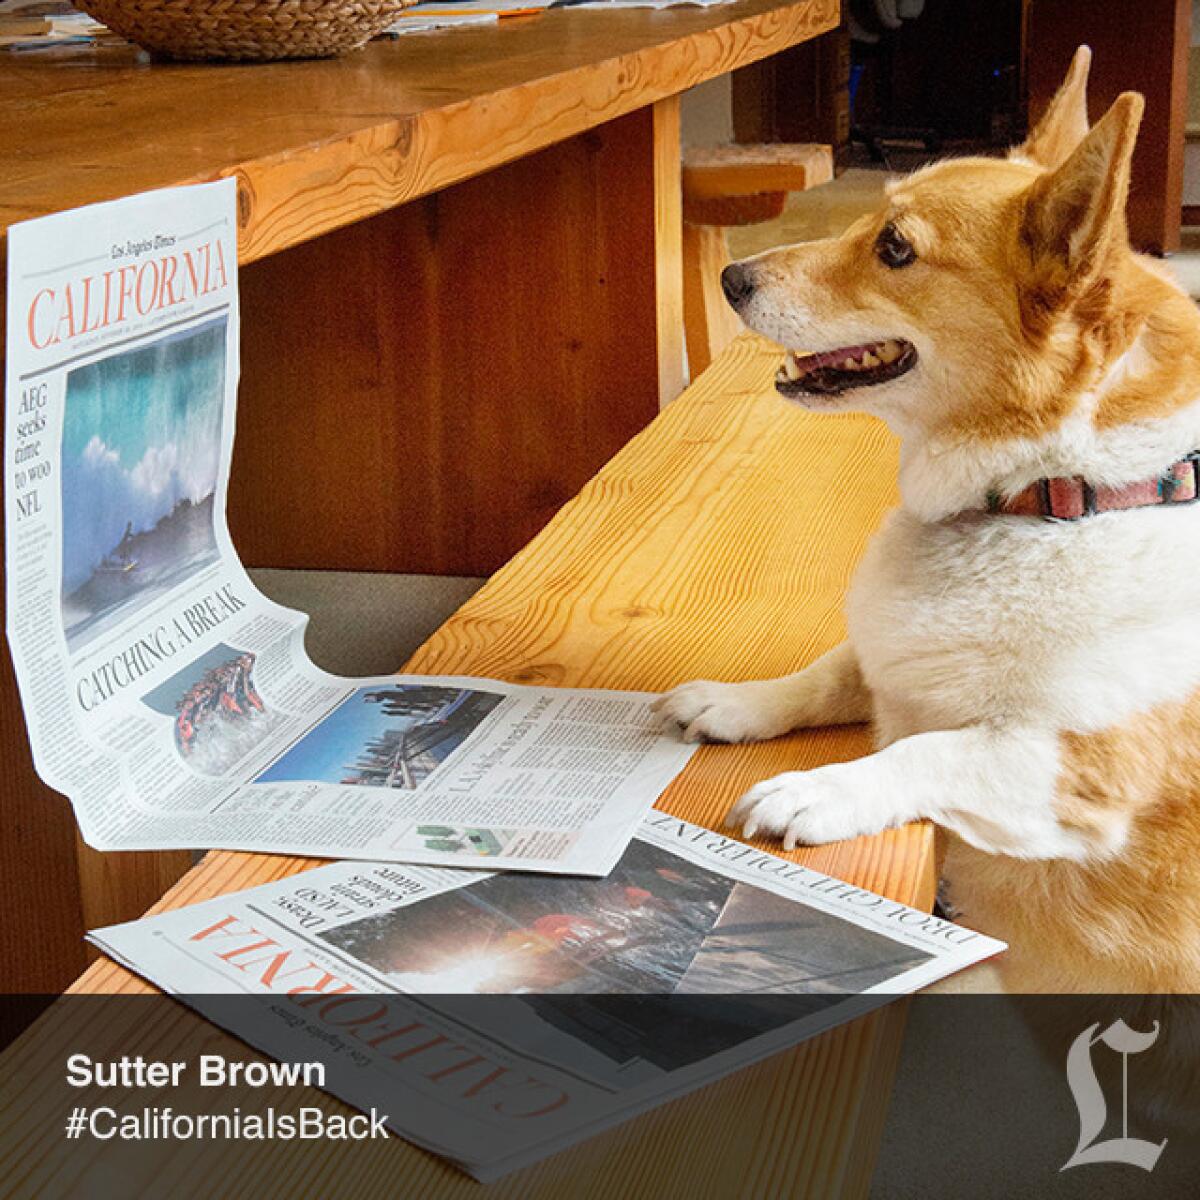 Sutter Brown, California's First Dog